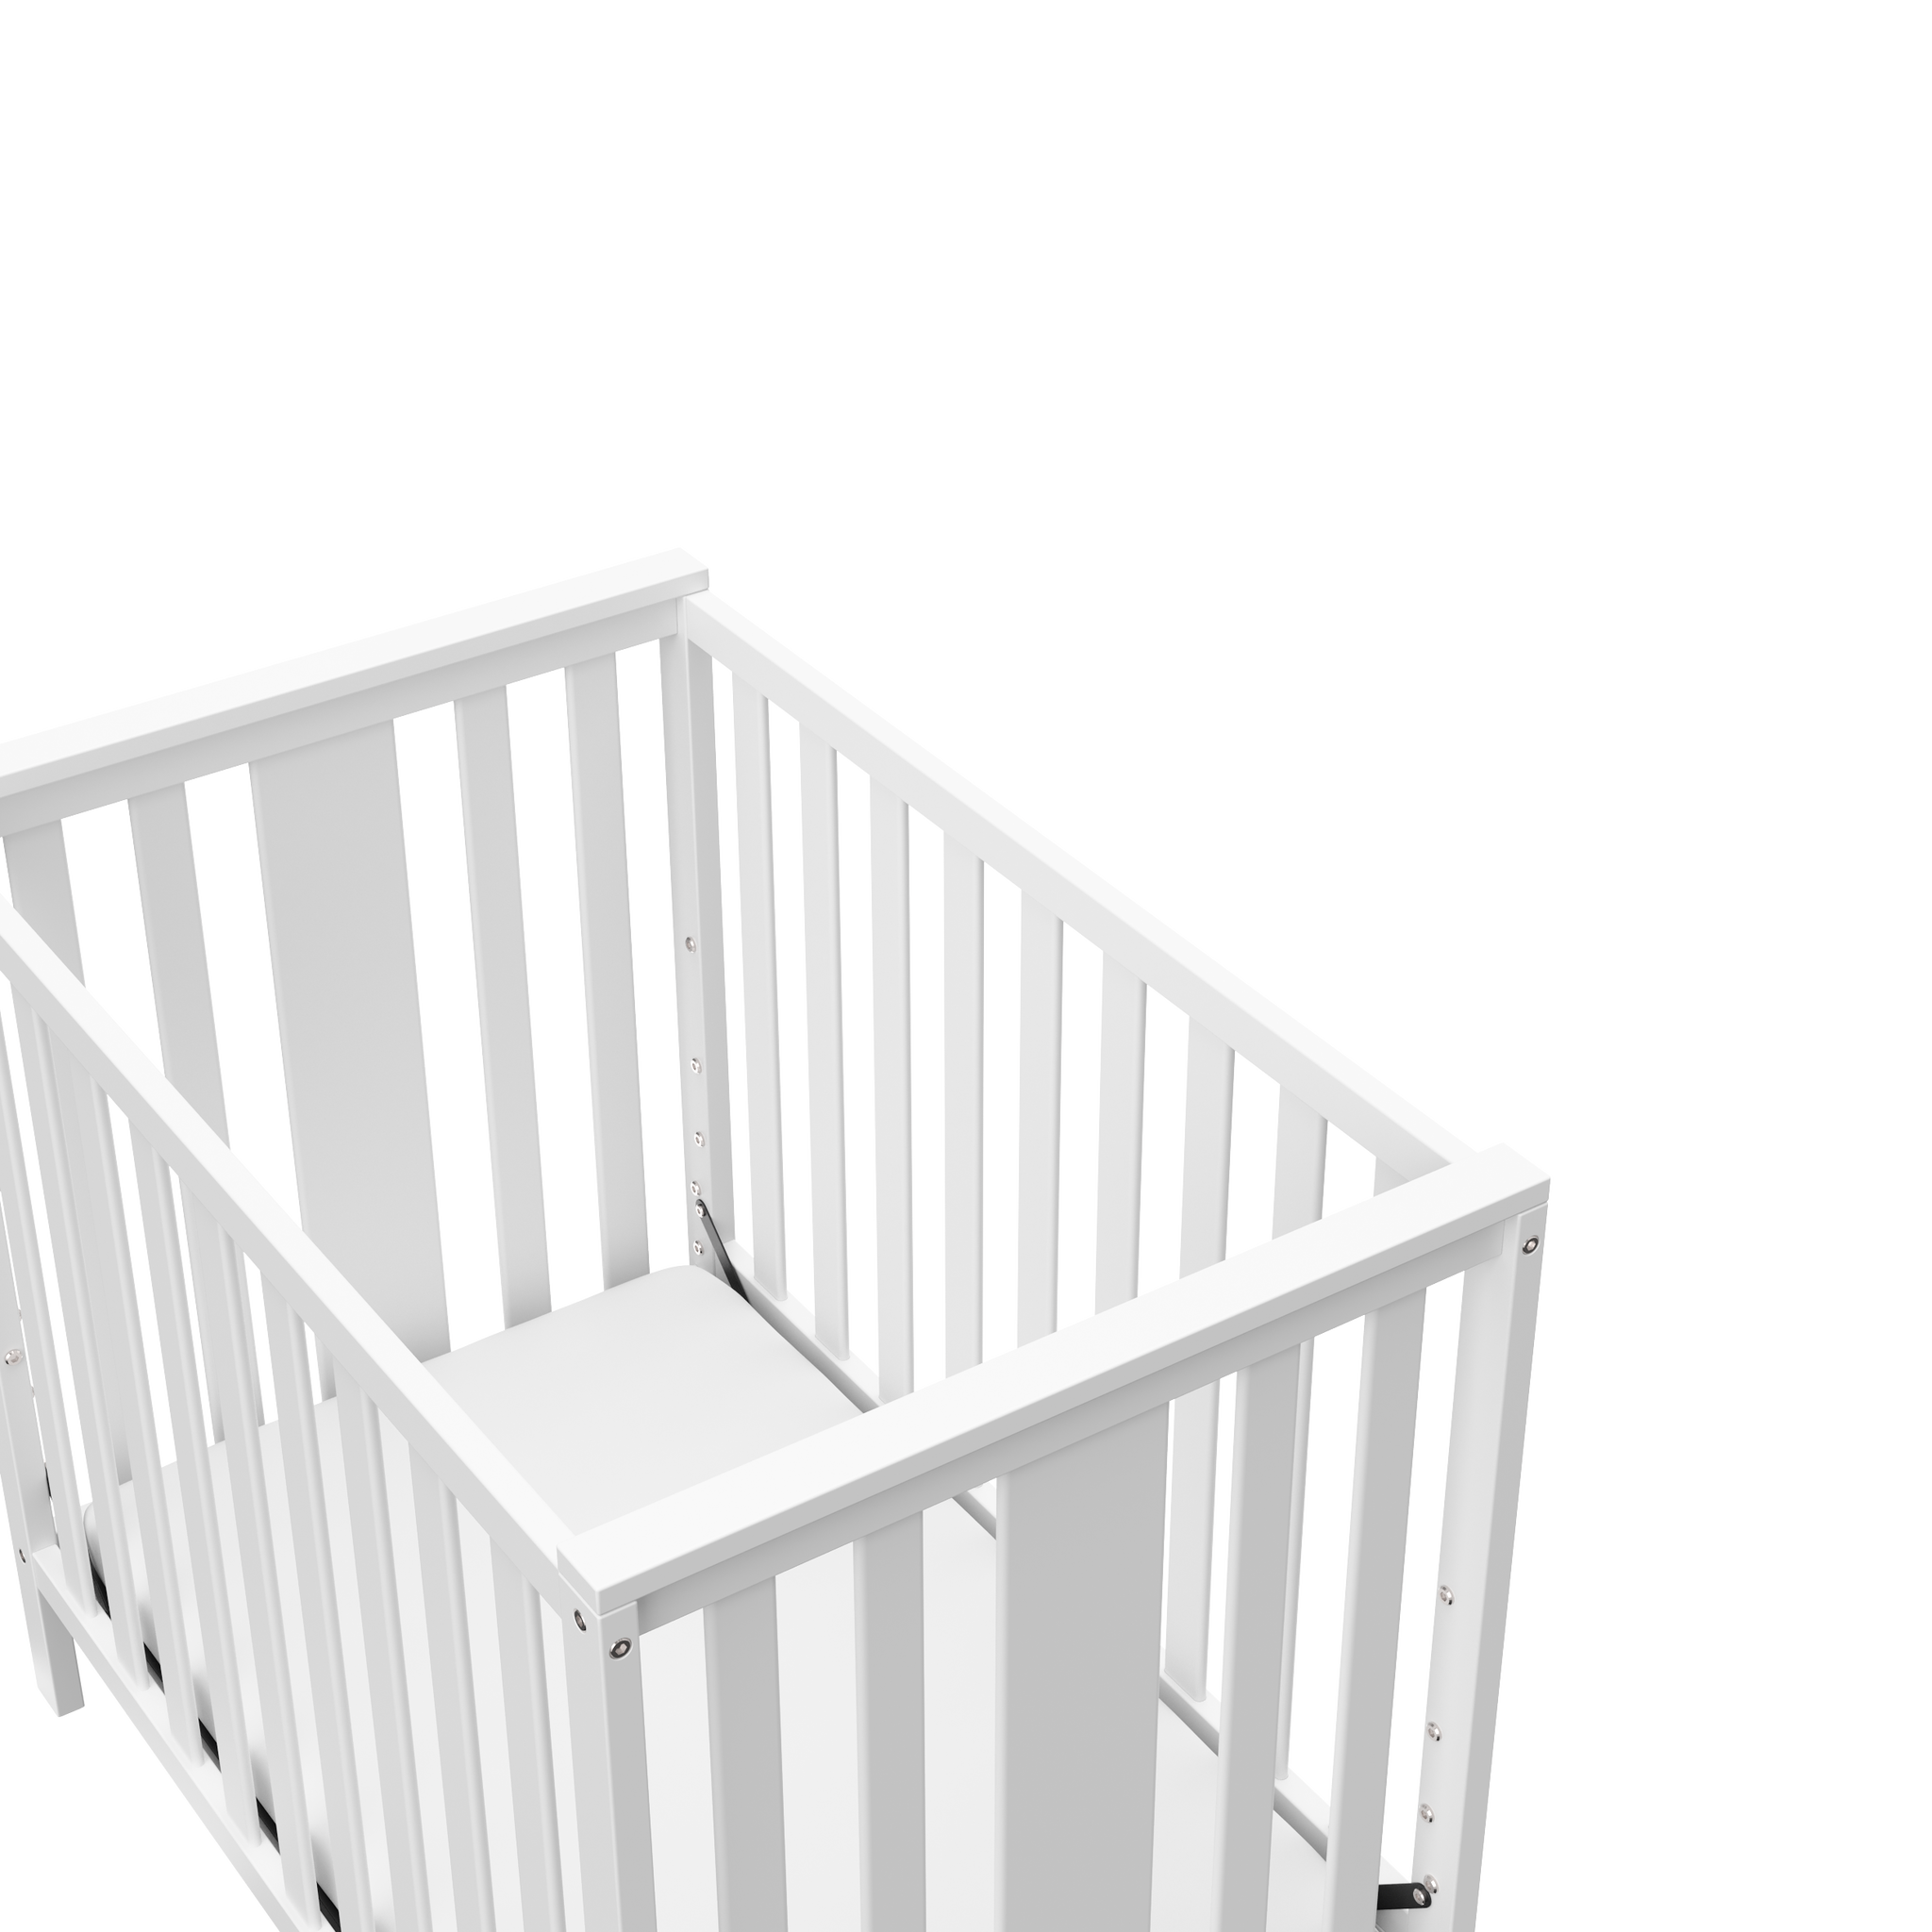 white close-up view of white crib